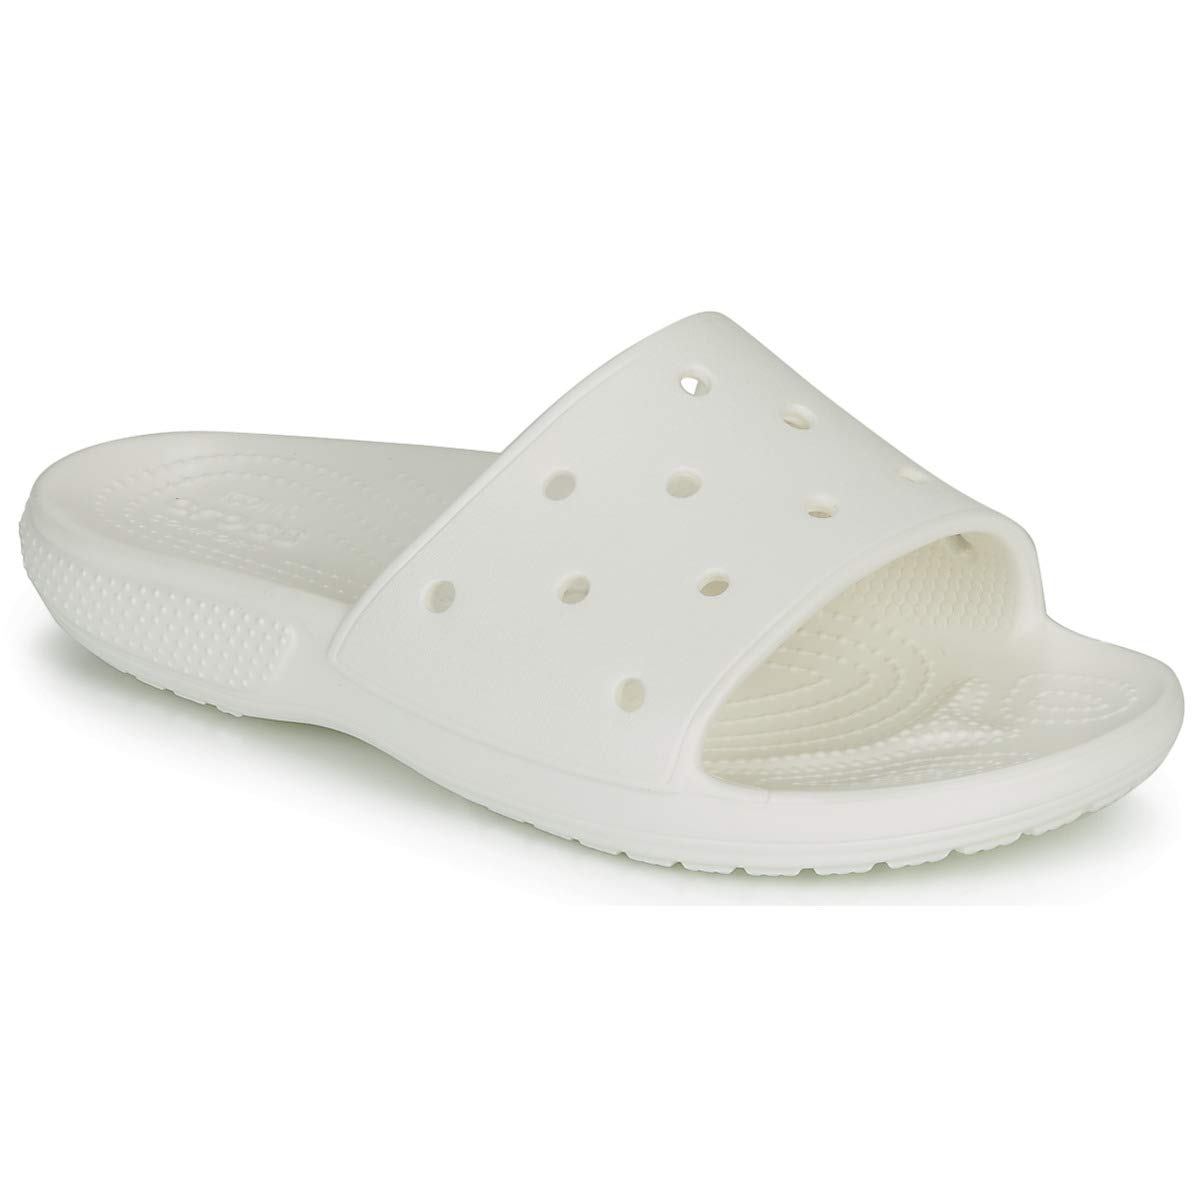 Crocs Unisex Classic Slide Sandals, White, 12 Men/14 Women